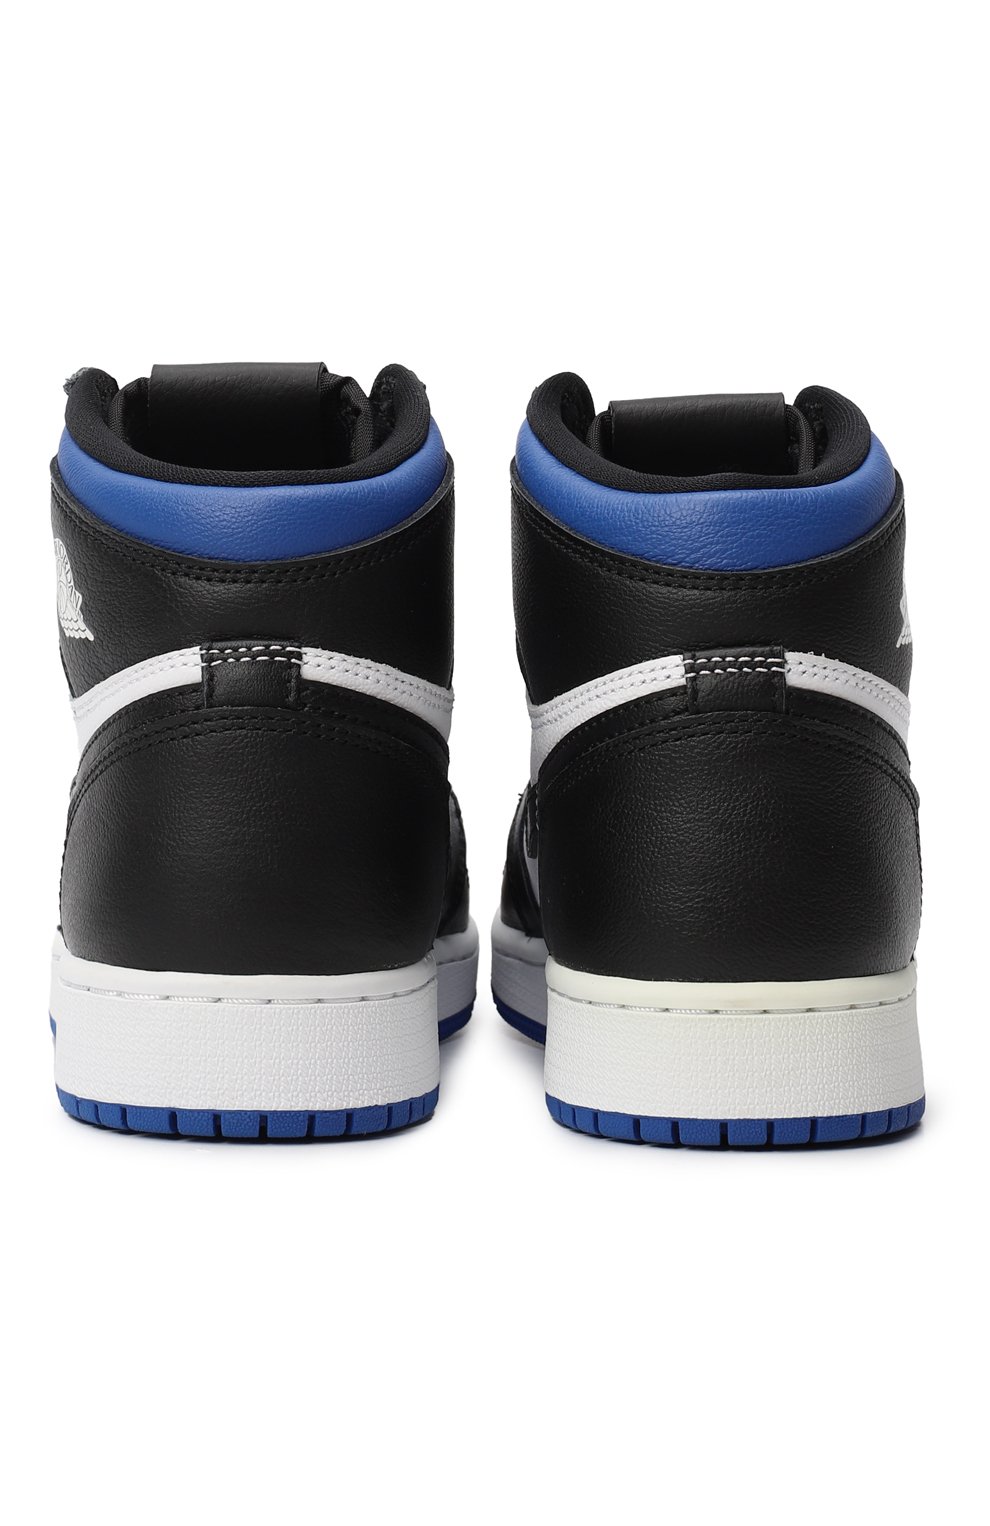 Кеды Air Jordan 1 Retro High Royal Toe | Nike | Разноцветный - 3